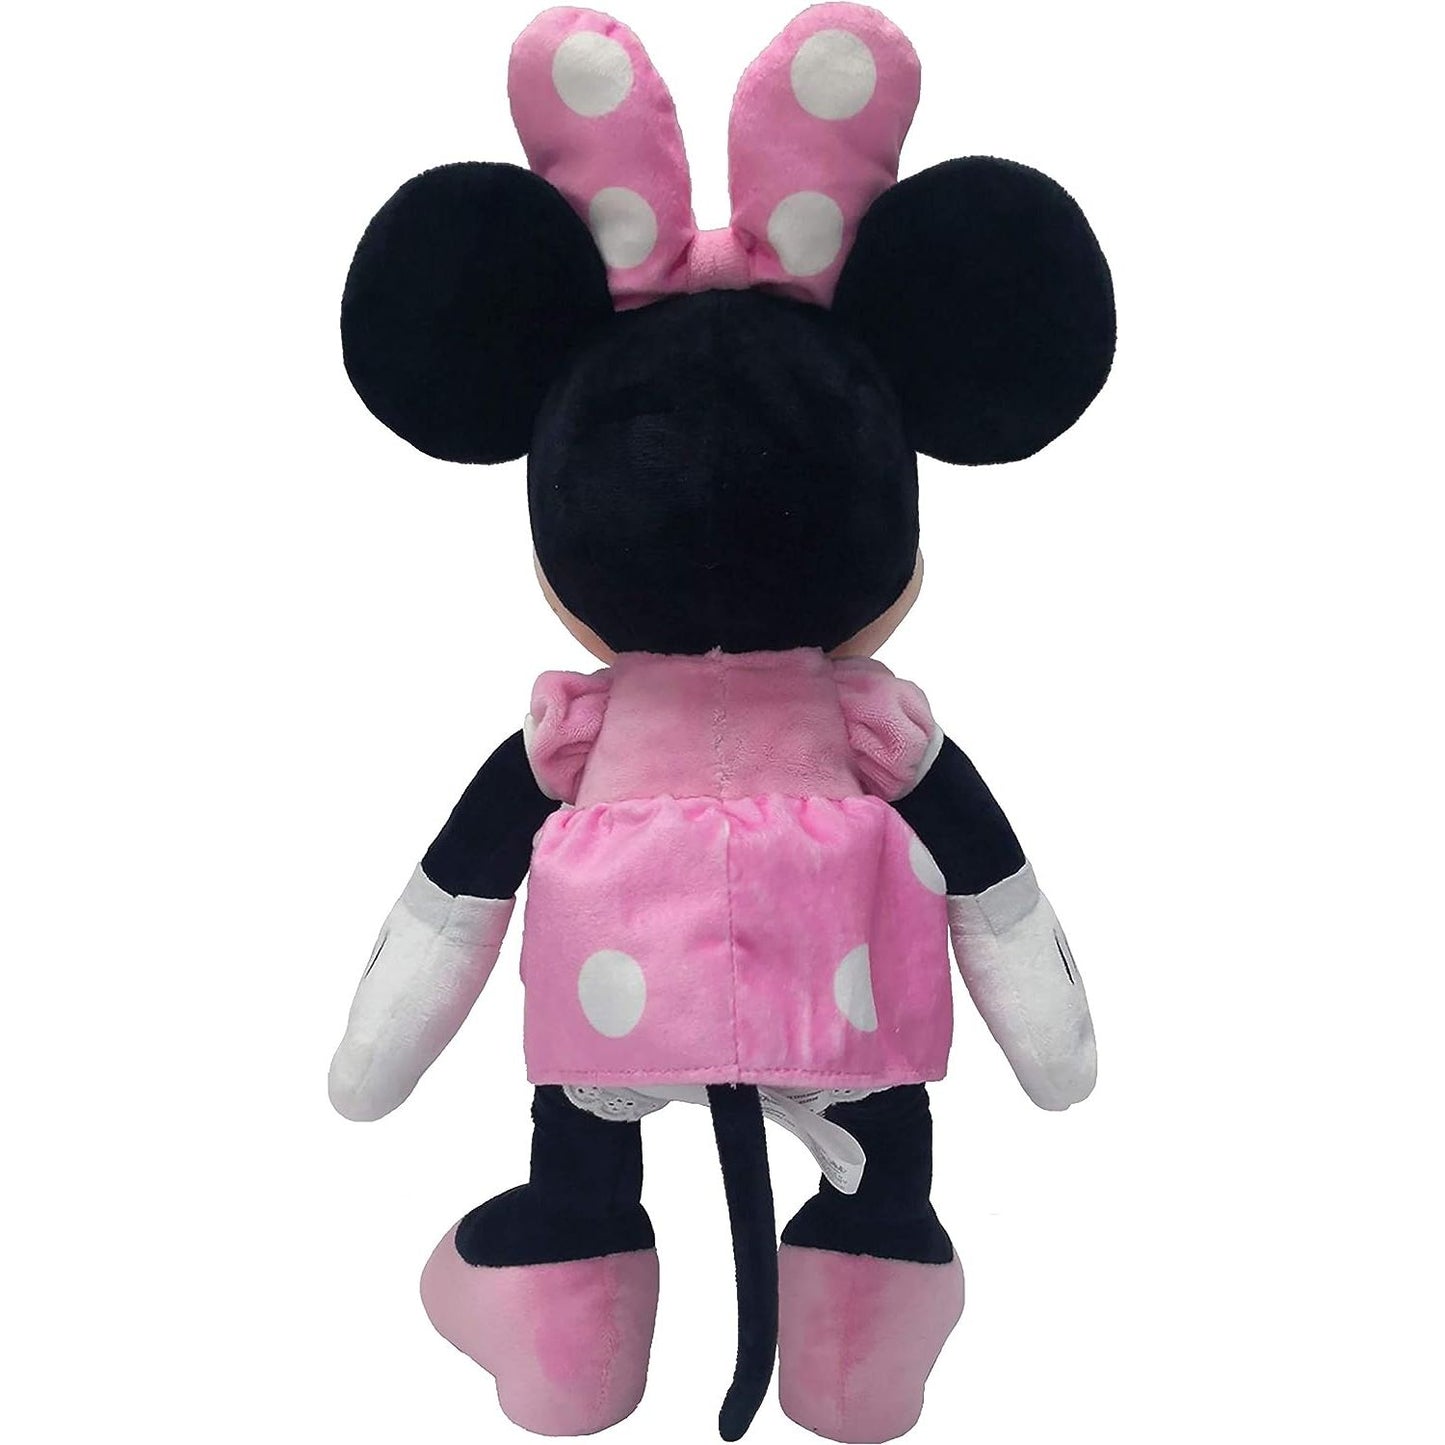 Disney Plush Toy Minnie Mouse Toy back view - Heretoserveyou